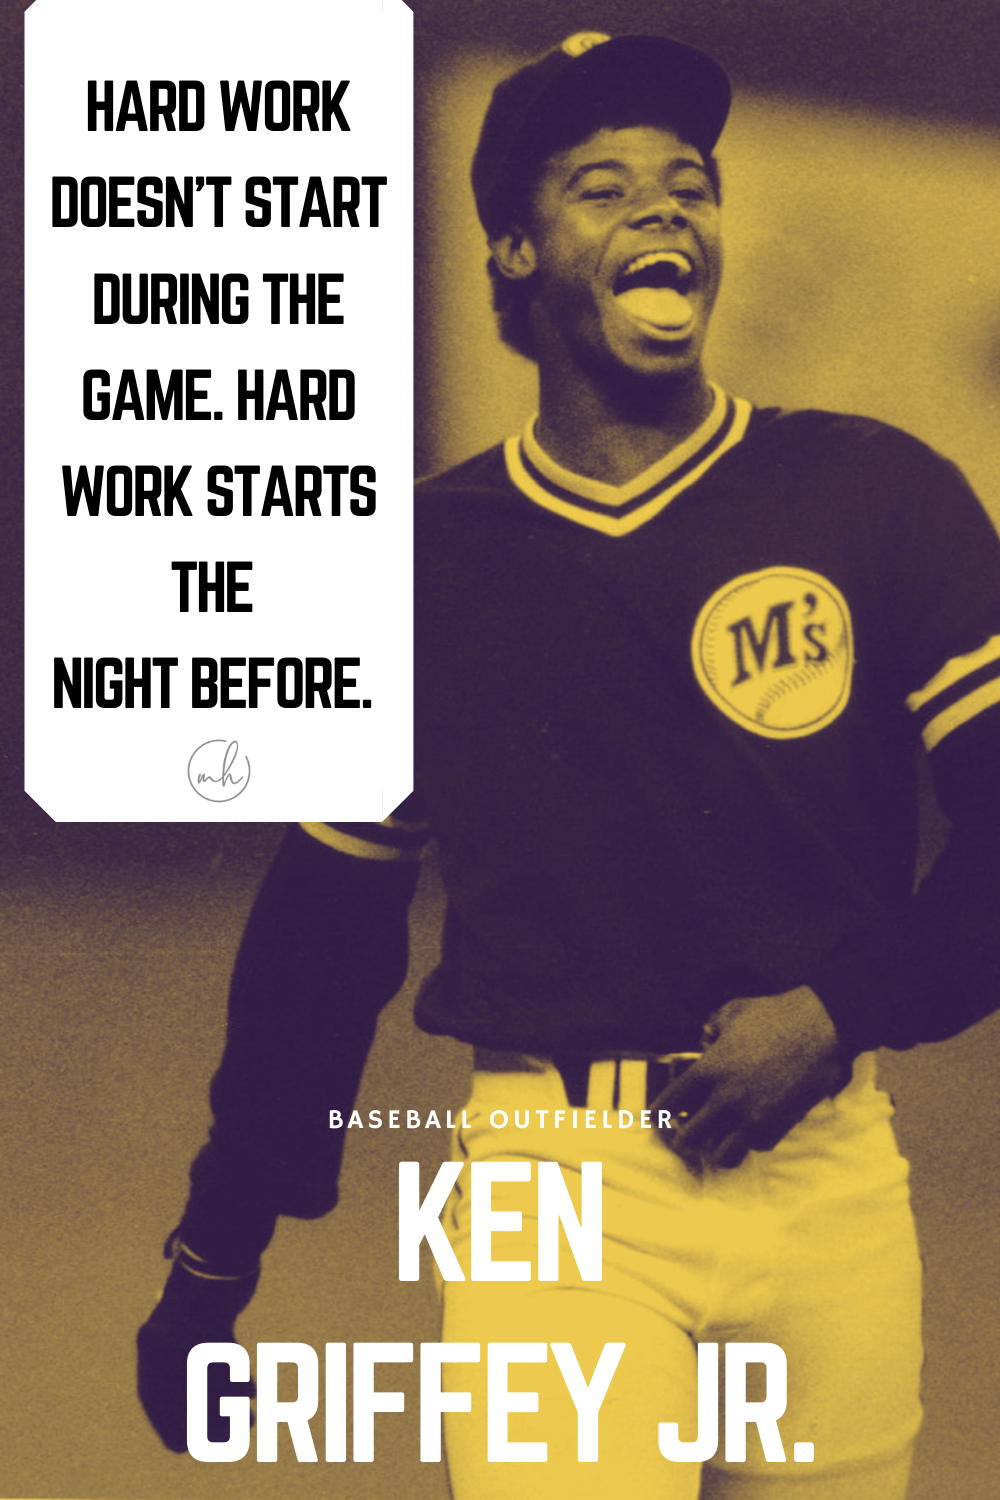 “Hard work doesn't start during the game. Hard work starts the night before.” - Ken Griffey Jr.